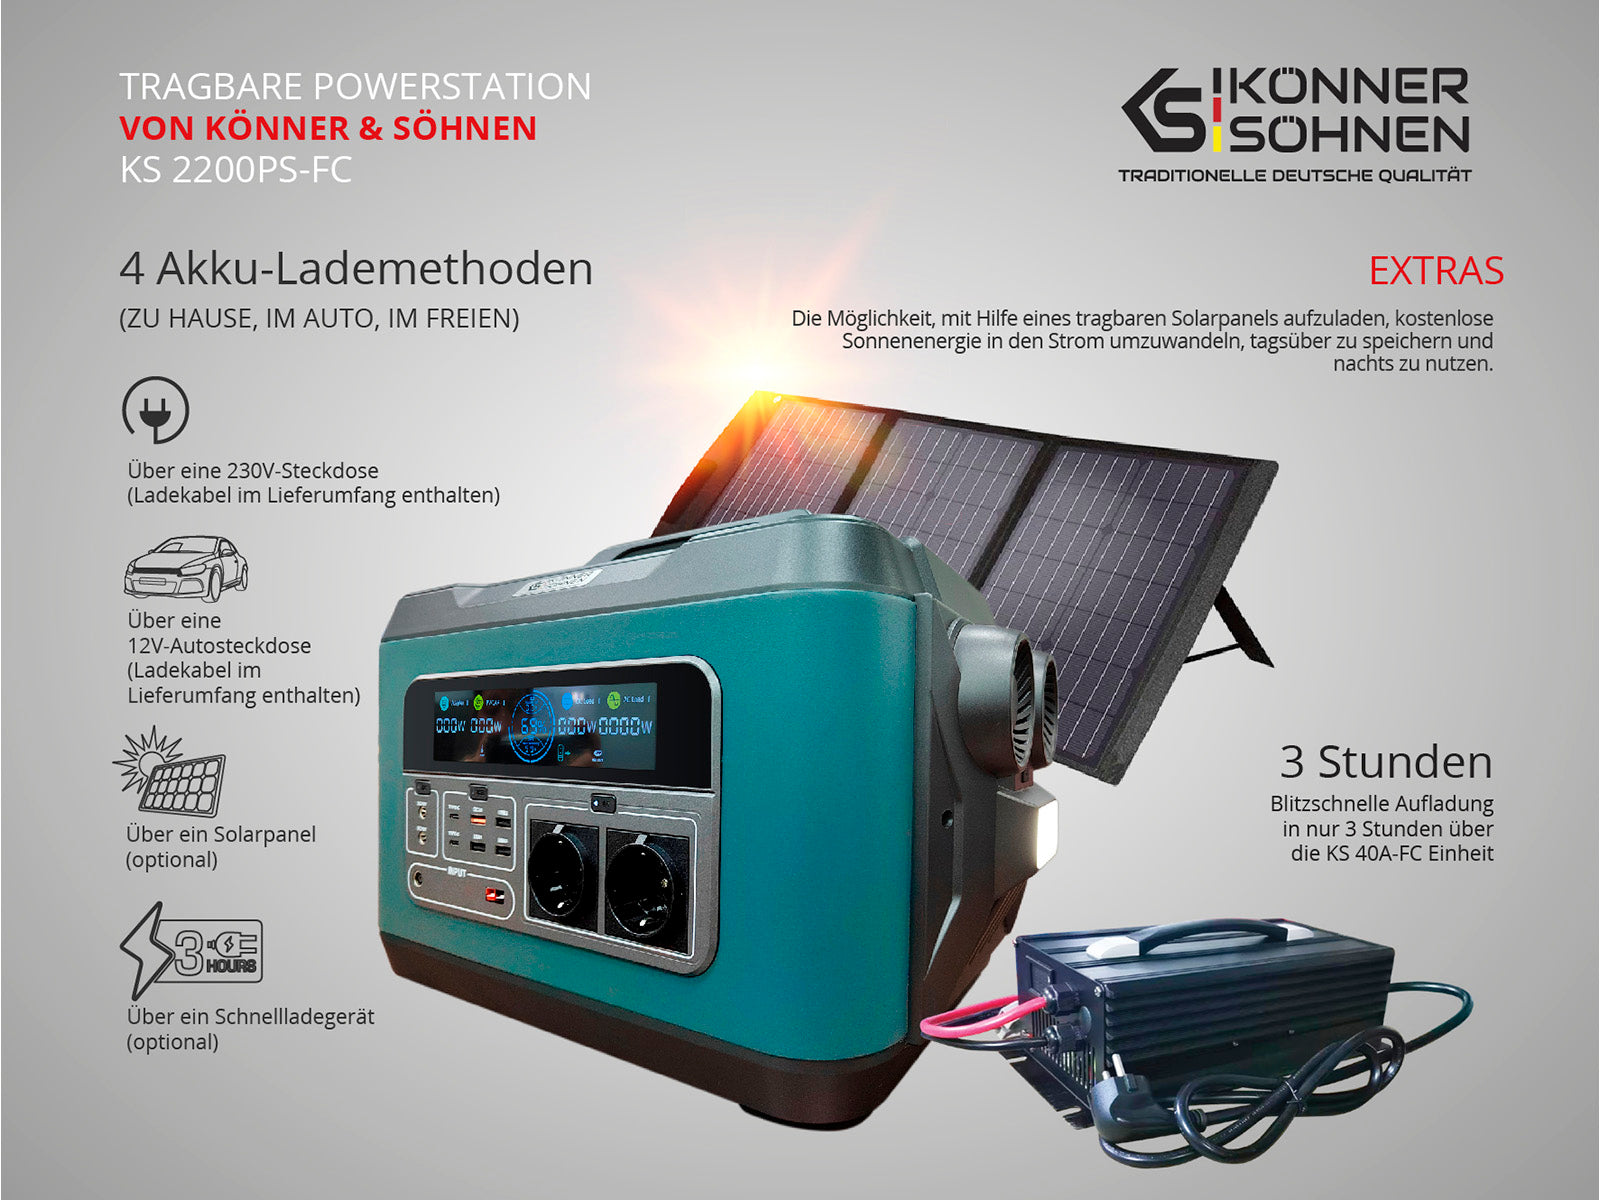 Portable power station KS 2200PS-FC